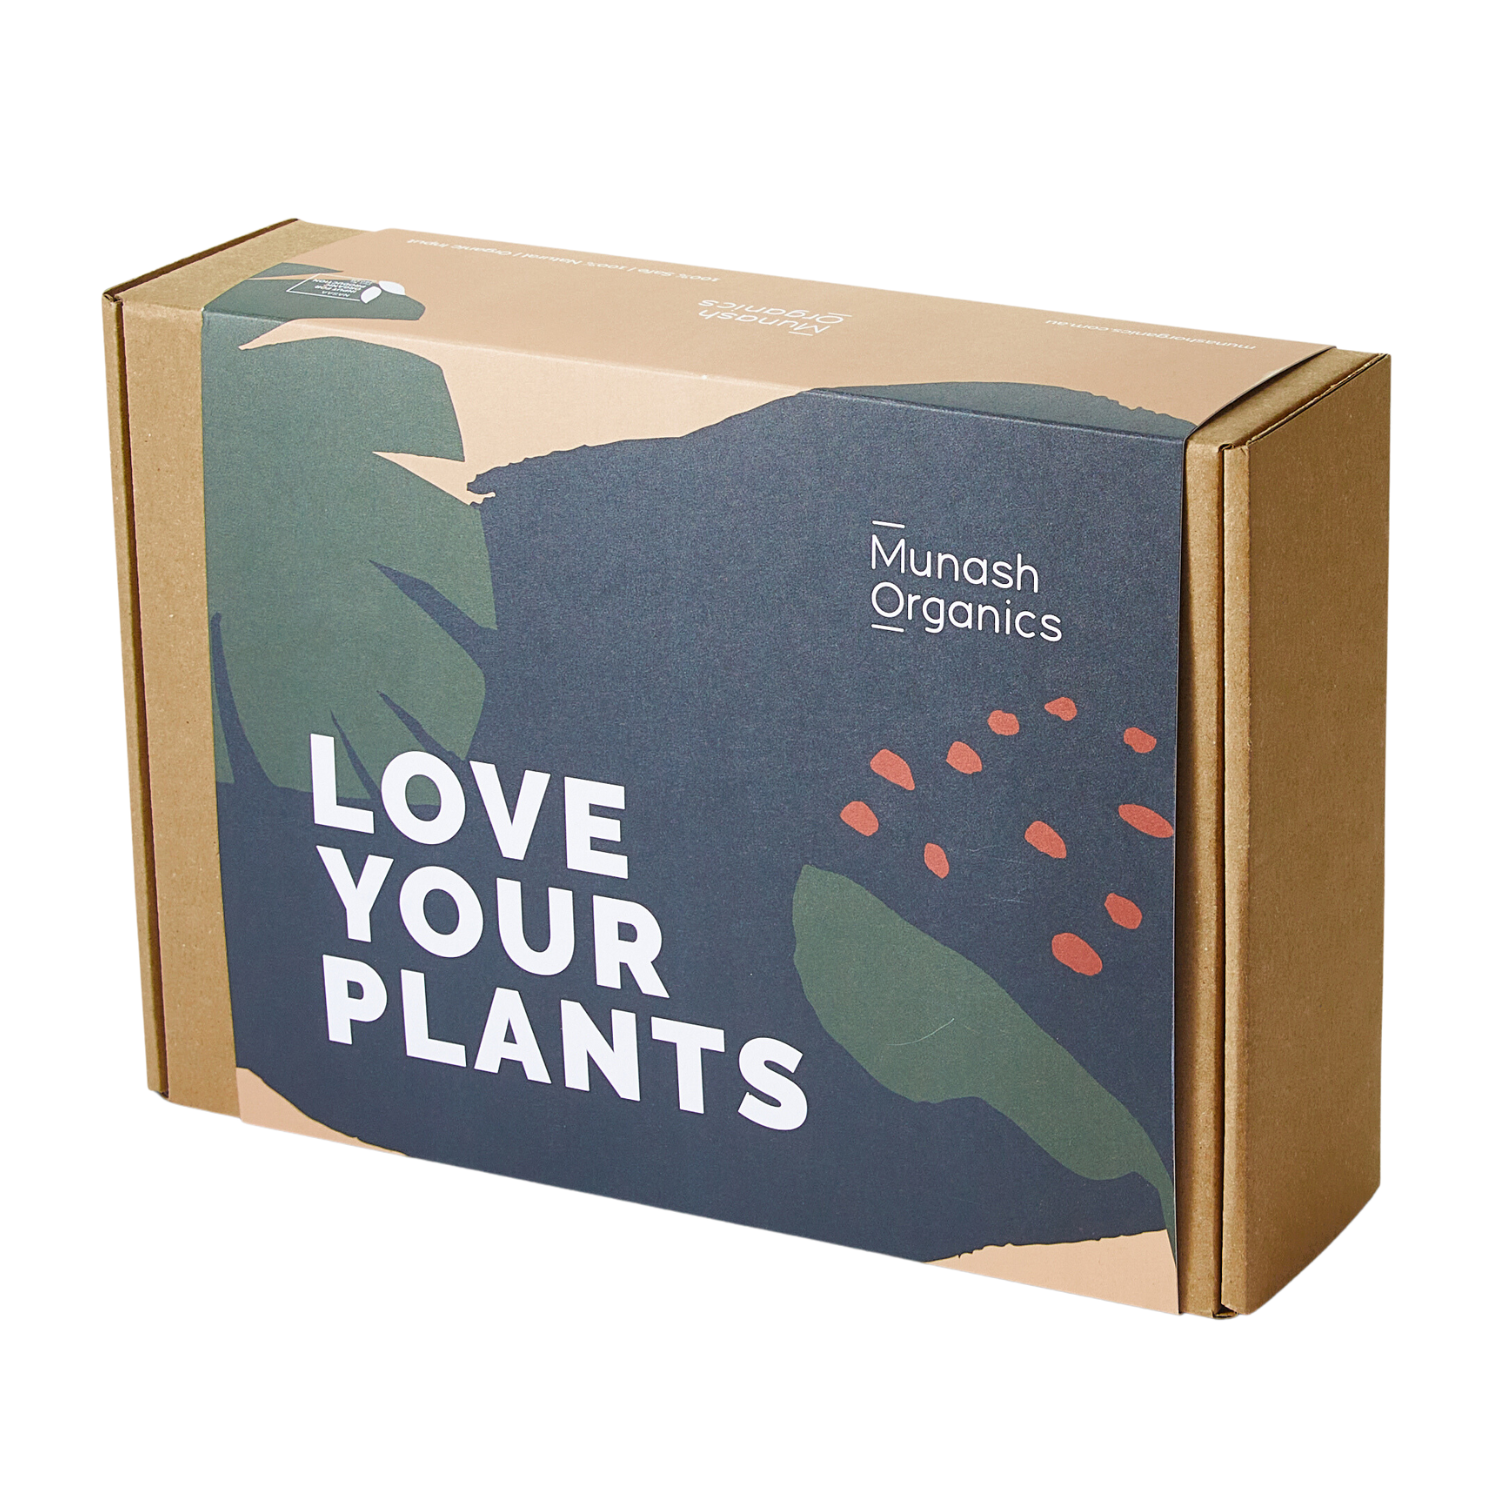 Munash Organics Love Your Plants Gift Pack